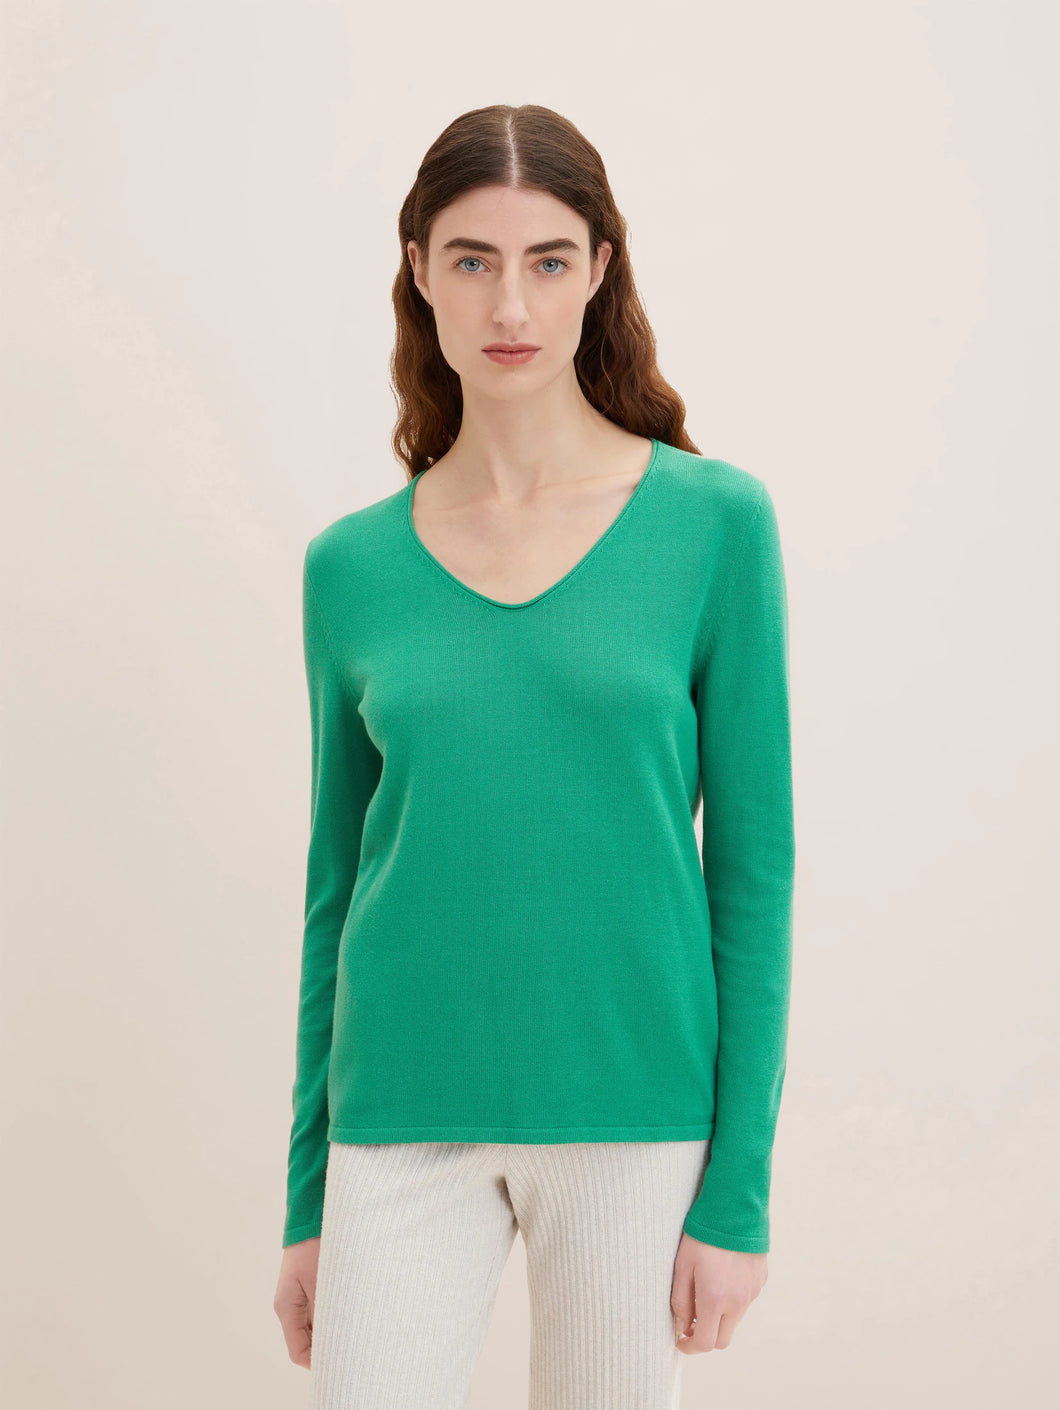 Tom Tailor Basic V-Neck Sweater in Flower Peach or Vivid Leaf Green